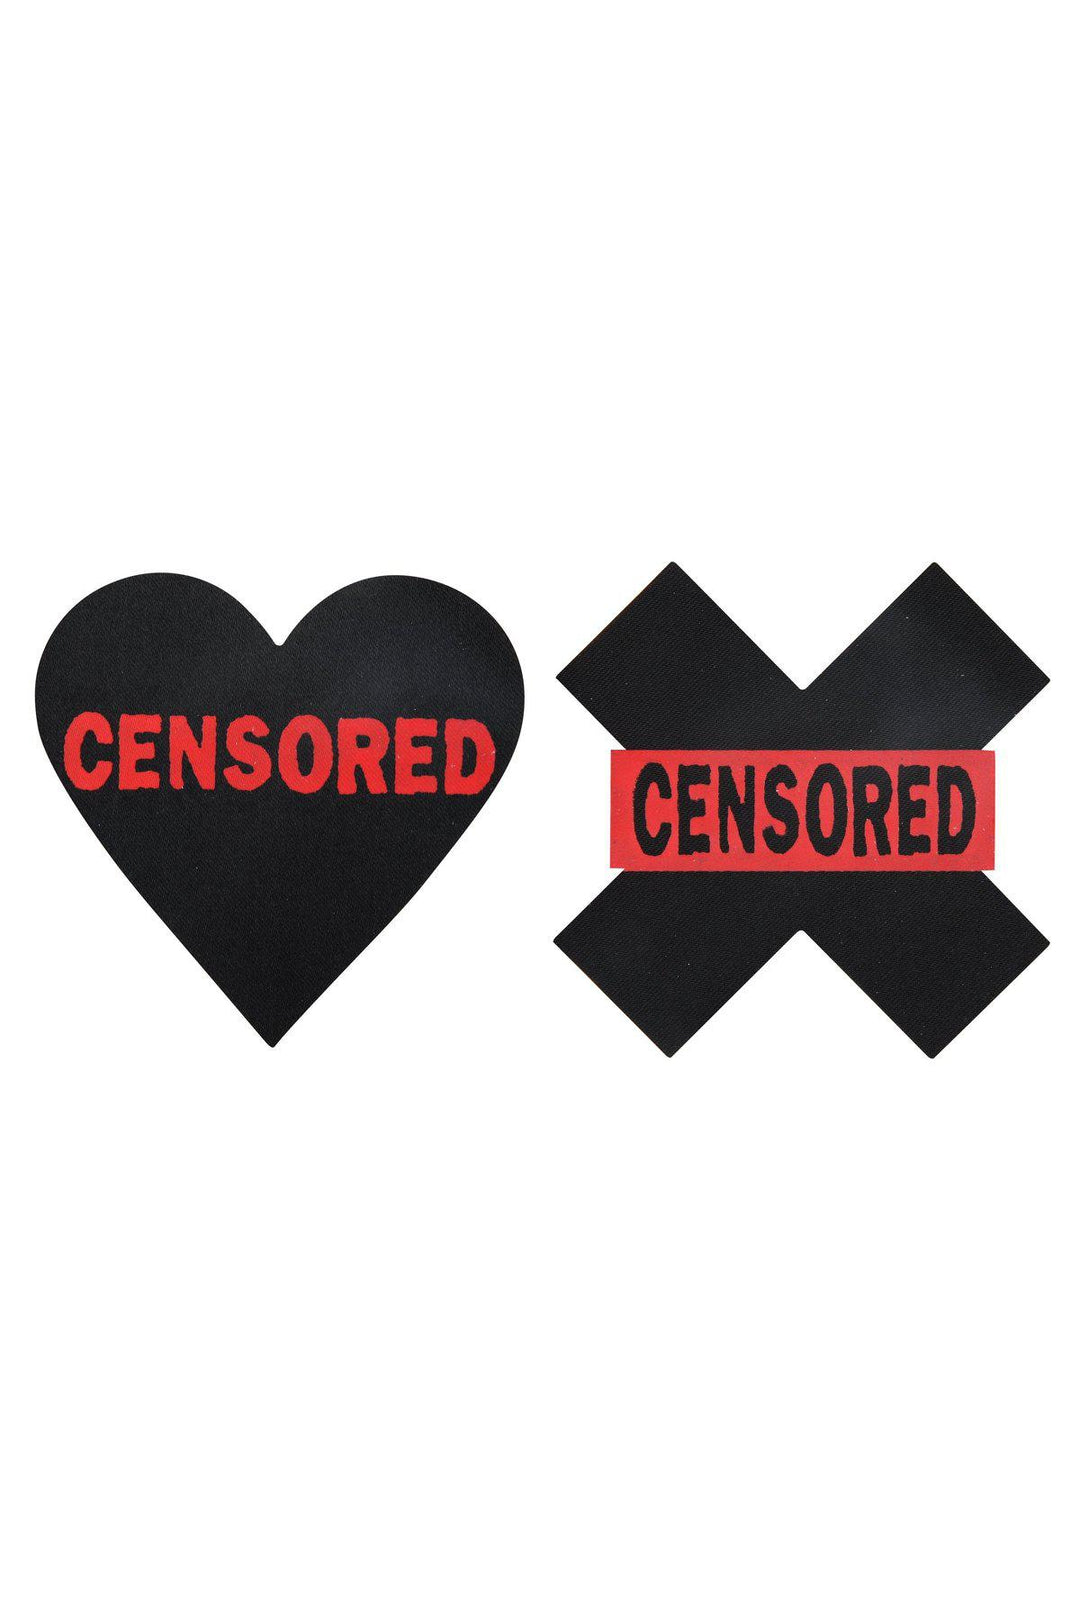 Censored Pasties Set-Pasties-Peekaboo Pasties-Black-O/S-SEXYSHOES.COM